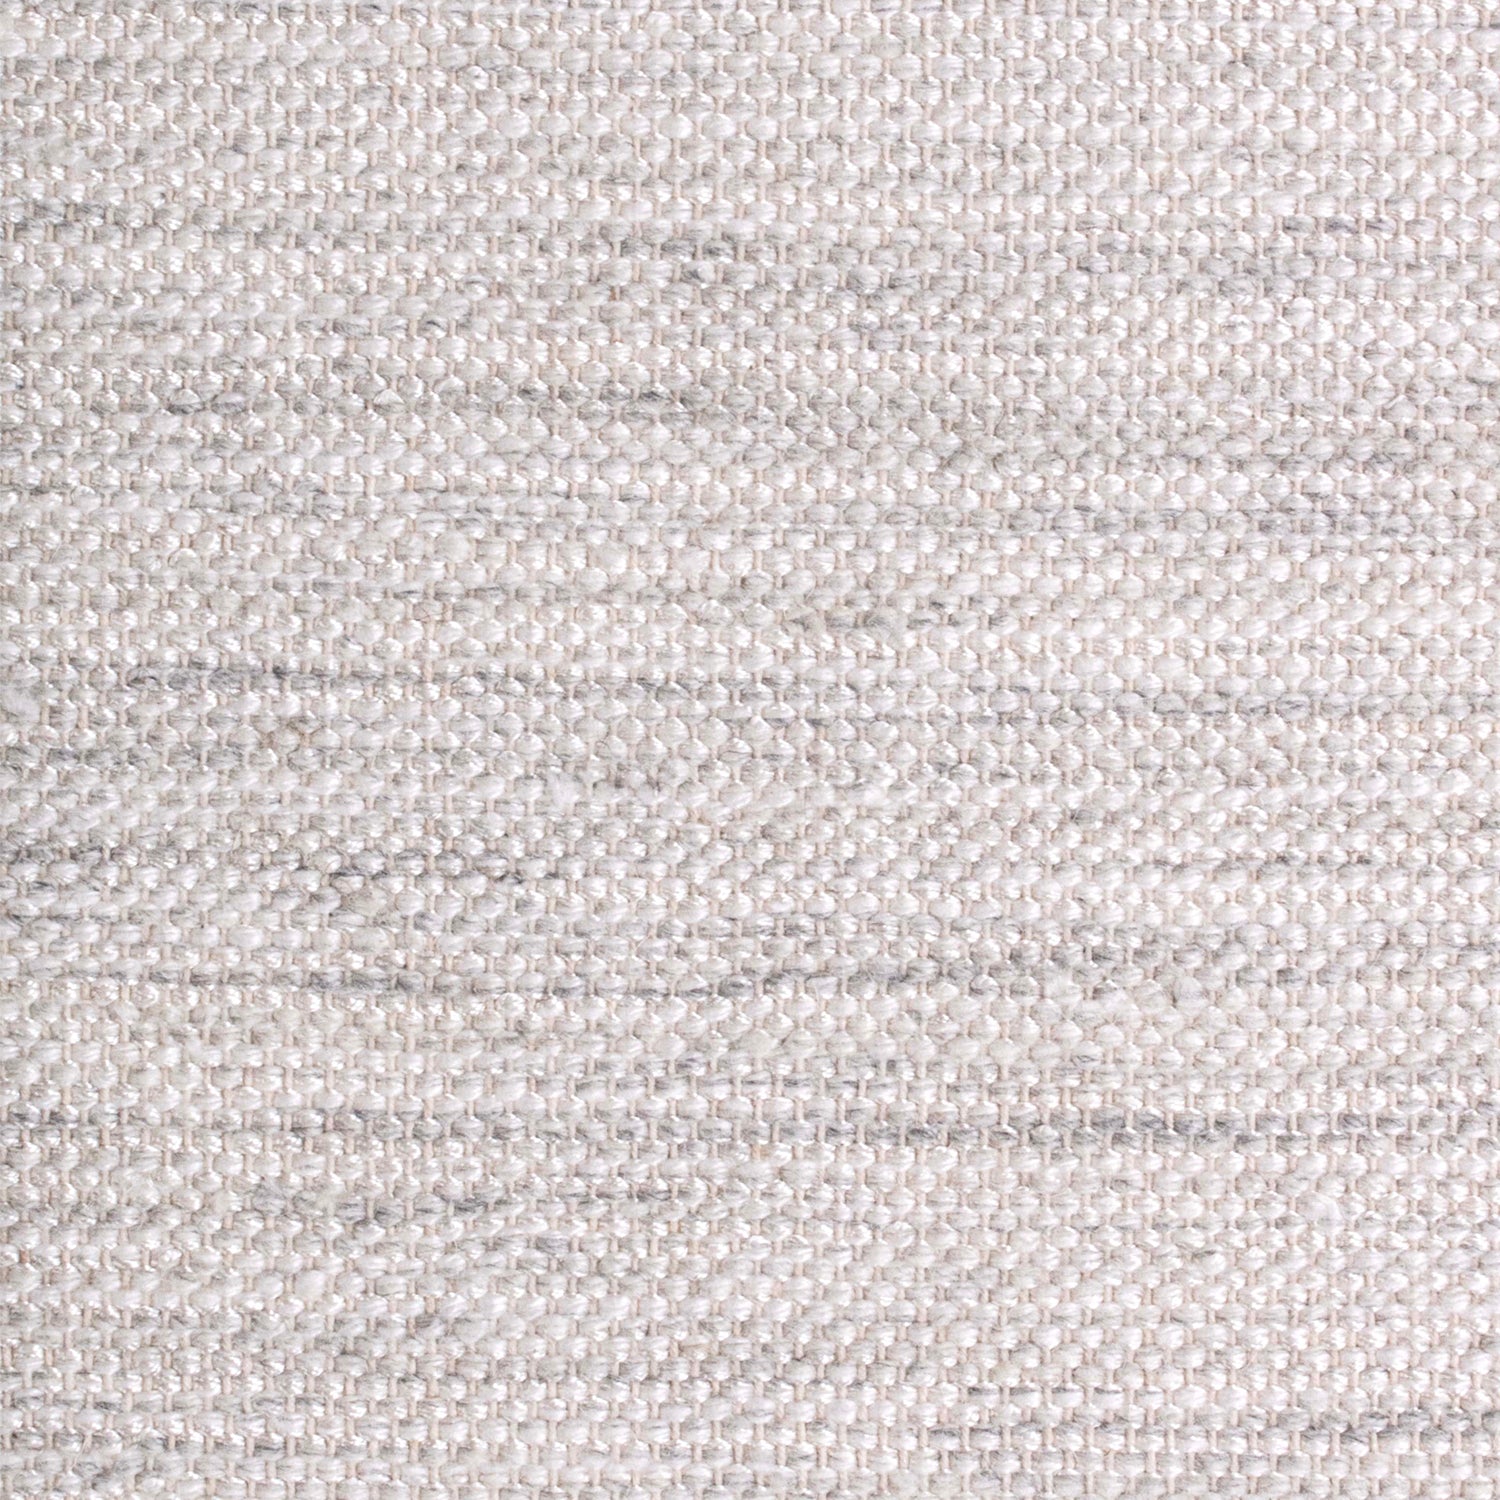 Wool-blend broadloom carpet swatch in a textured stripe weave in cream.